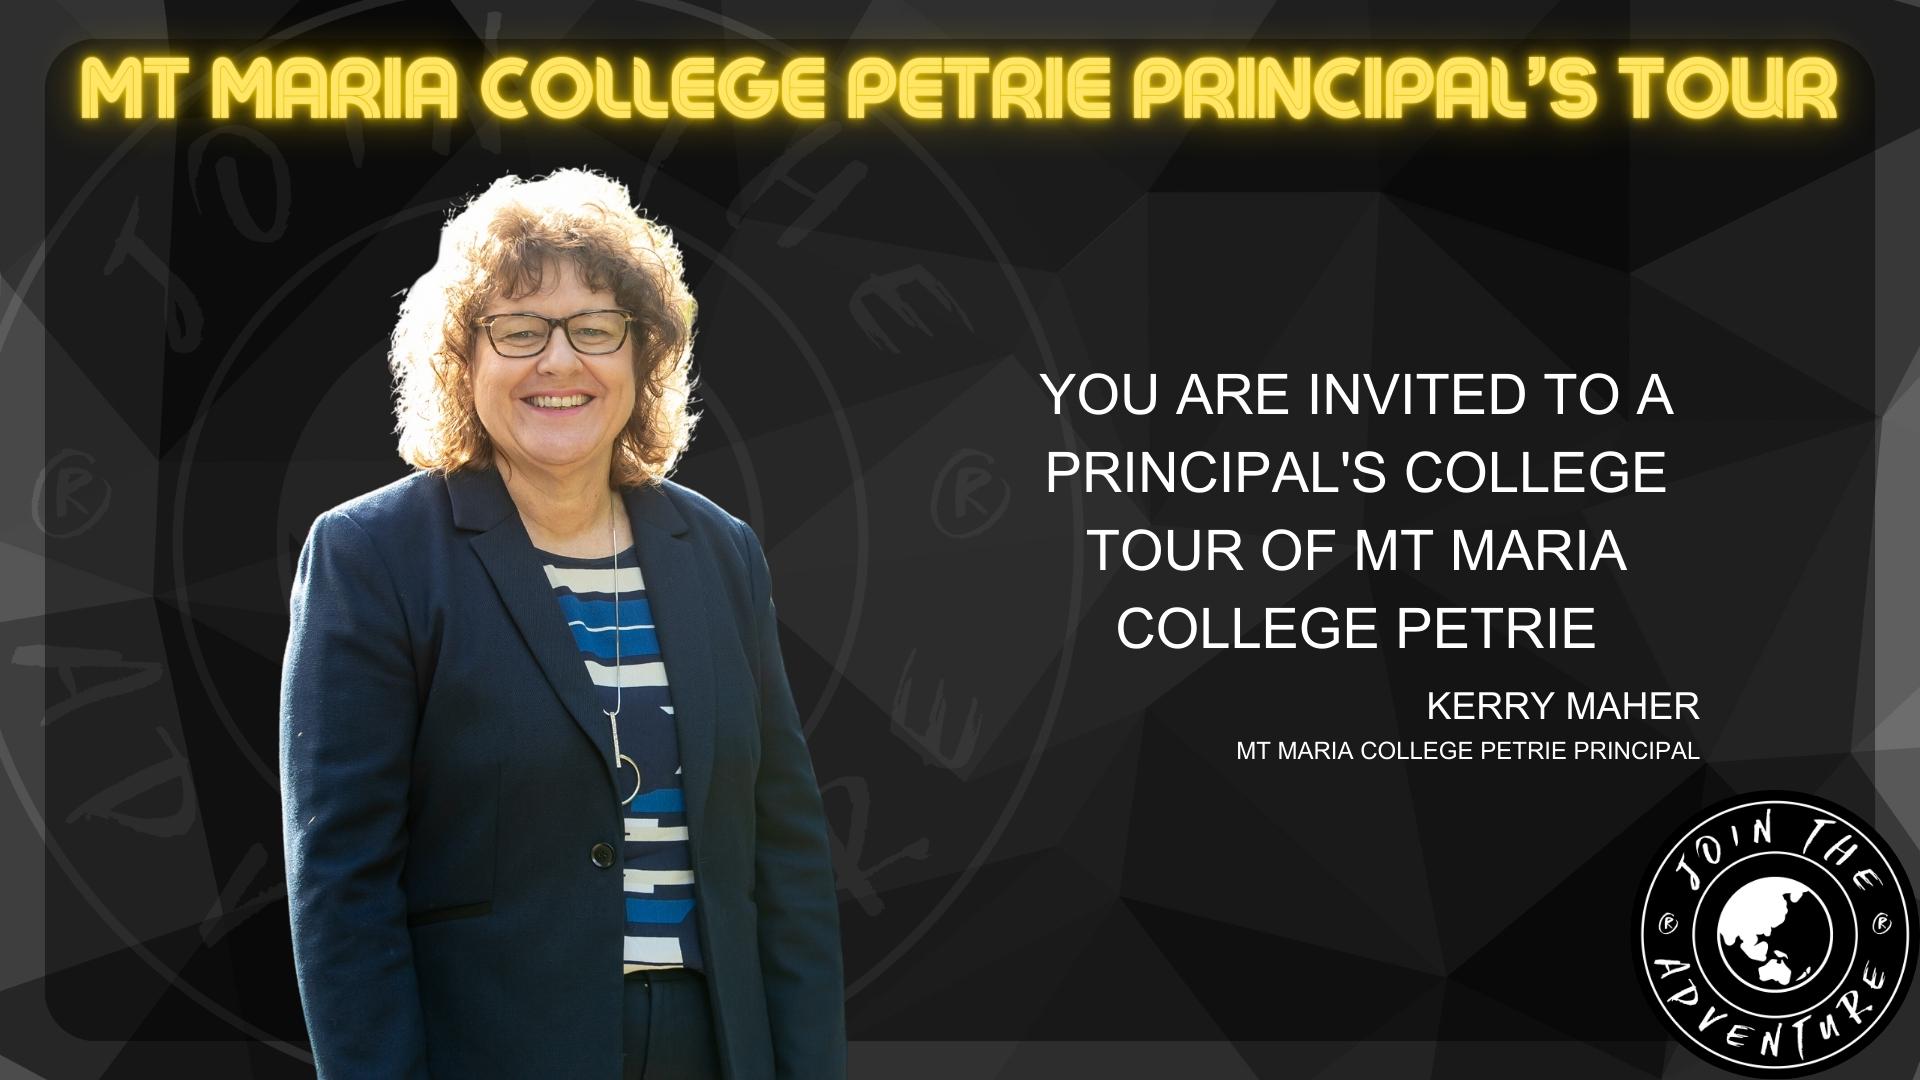 Mt Maria College Petrie Principal’s Tour